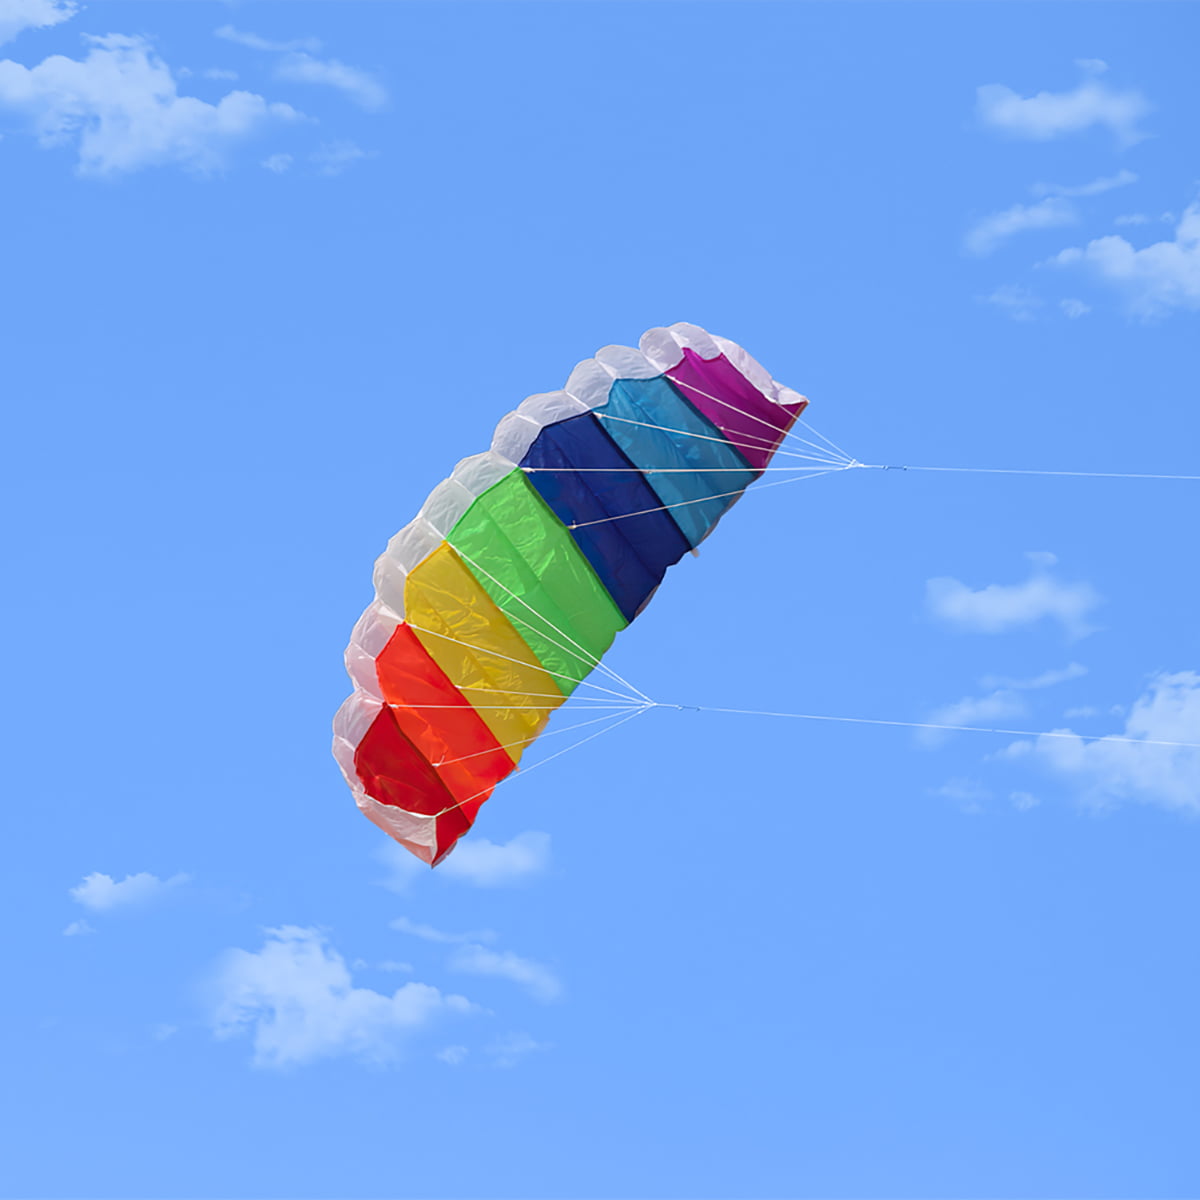 Rainbow Pocket Kite 30m Kite Line Adults and Children's Toy K1I2 